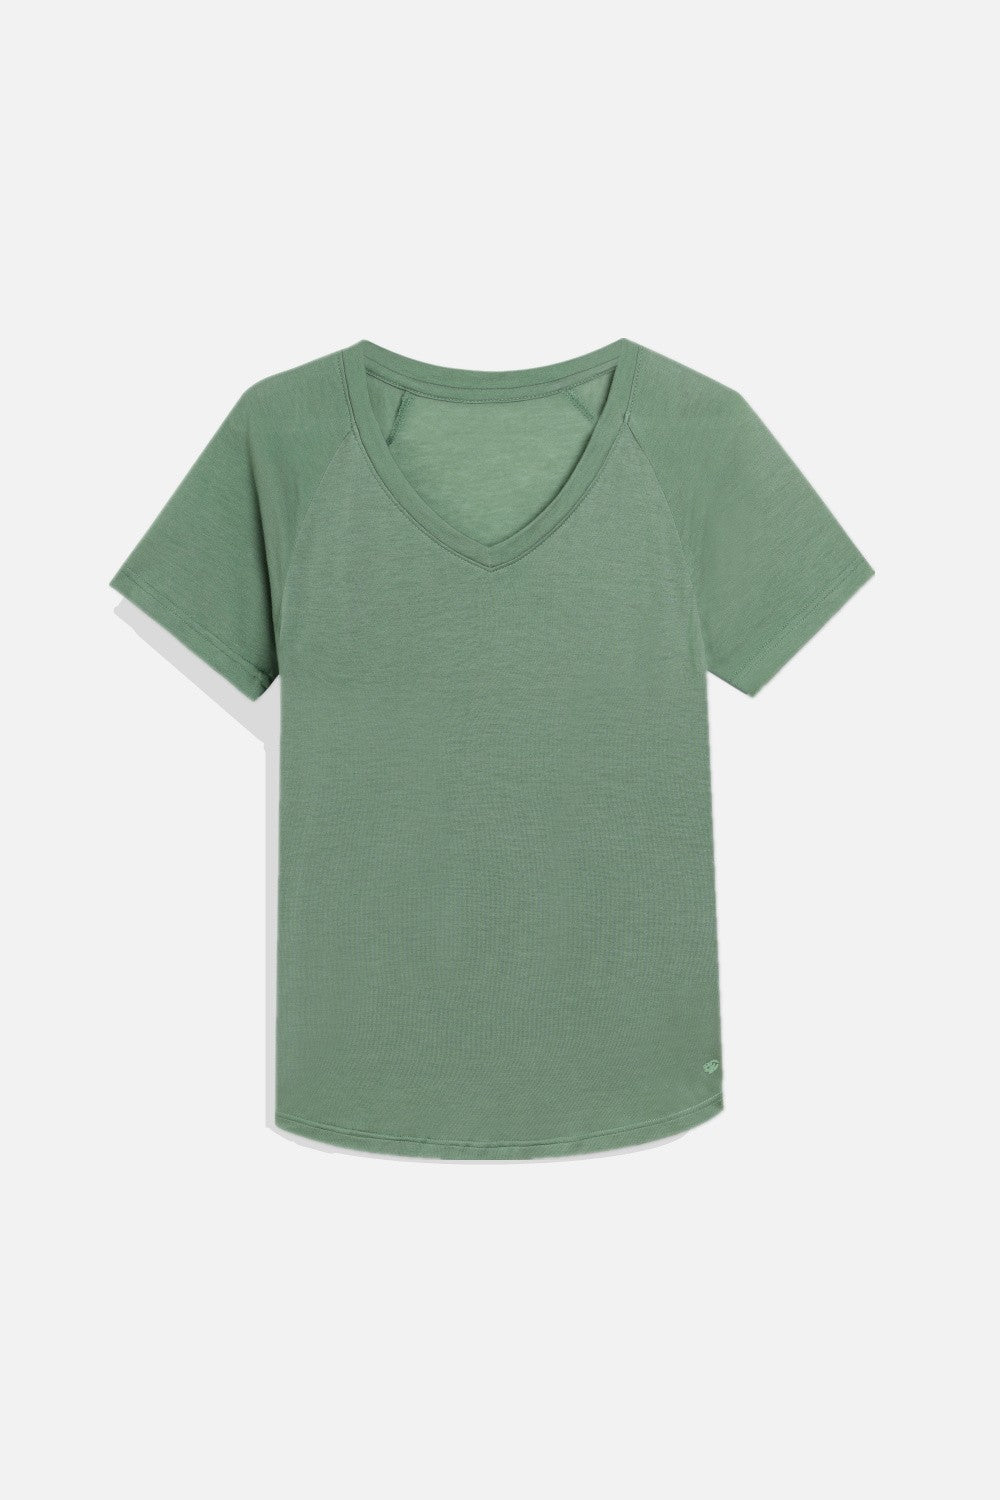 Women's Merino Wool Tencel Short Sleeve Top - Army Green